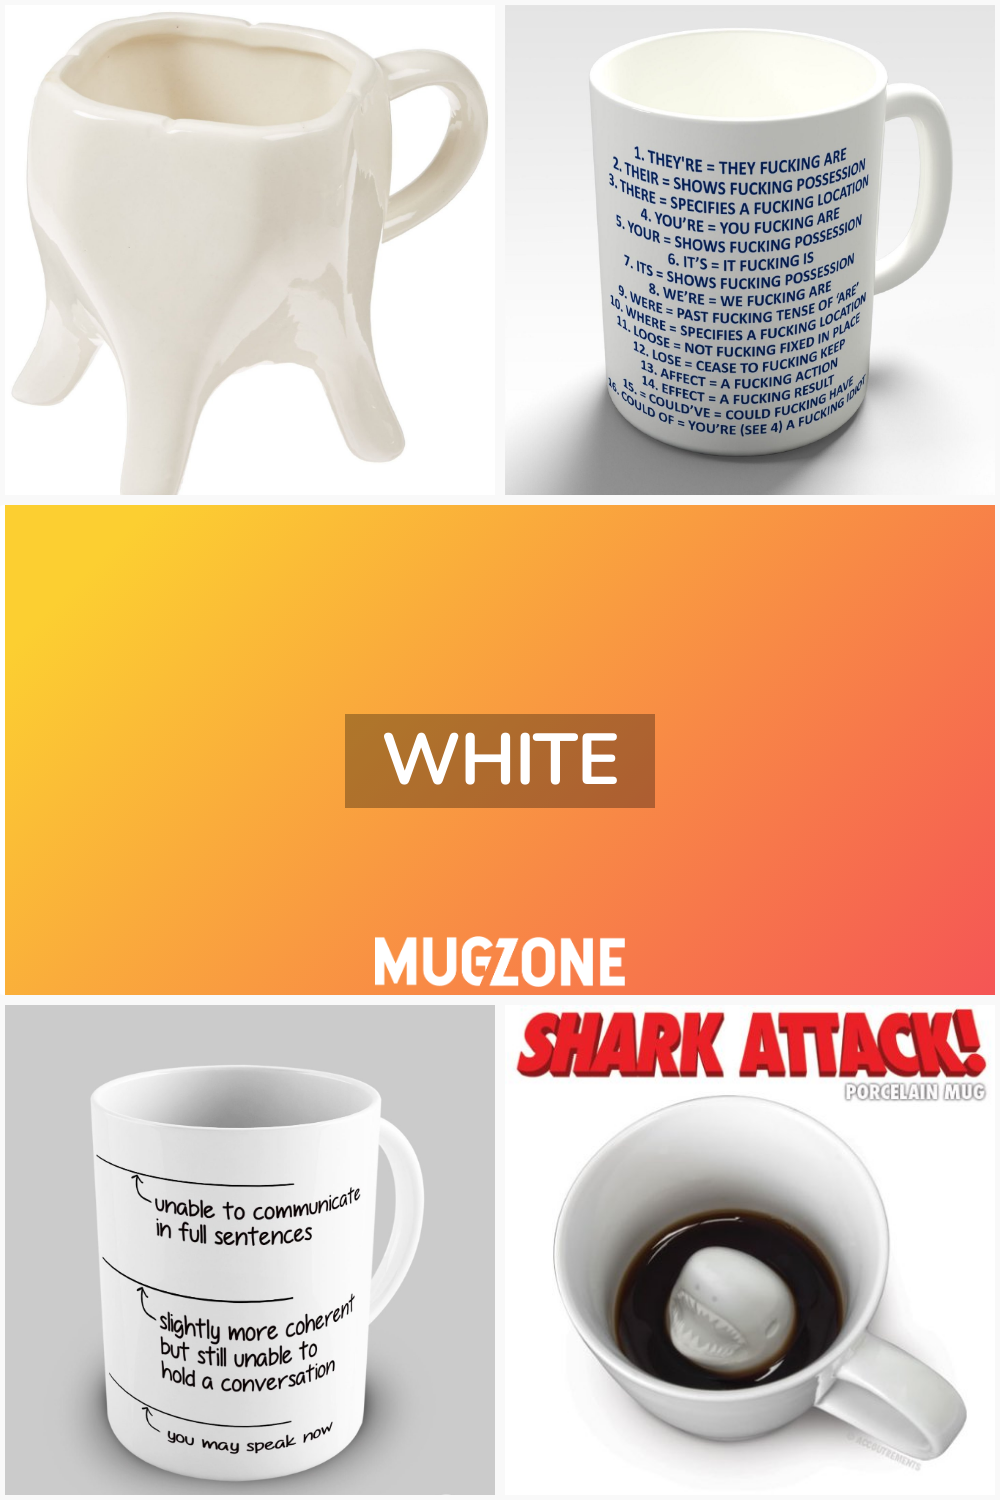 white // Mug Zone